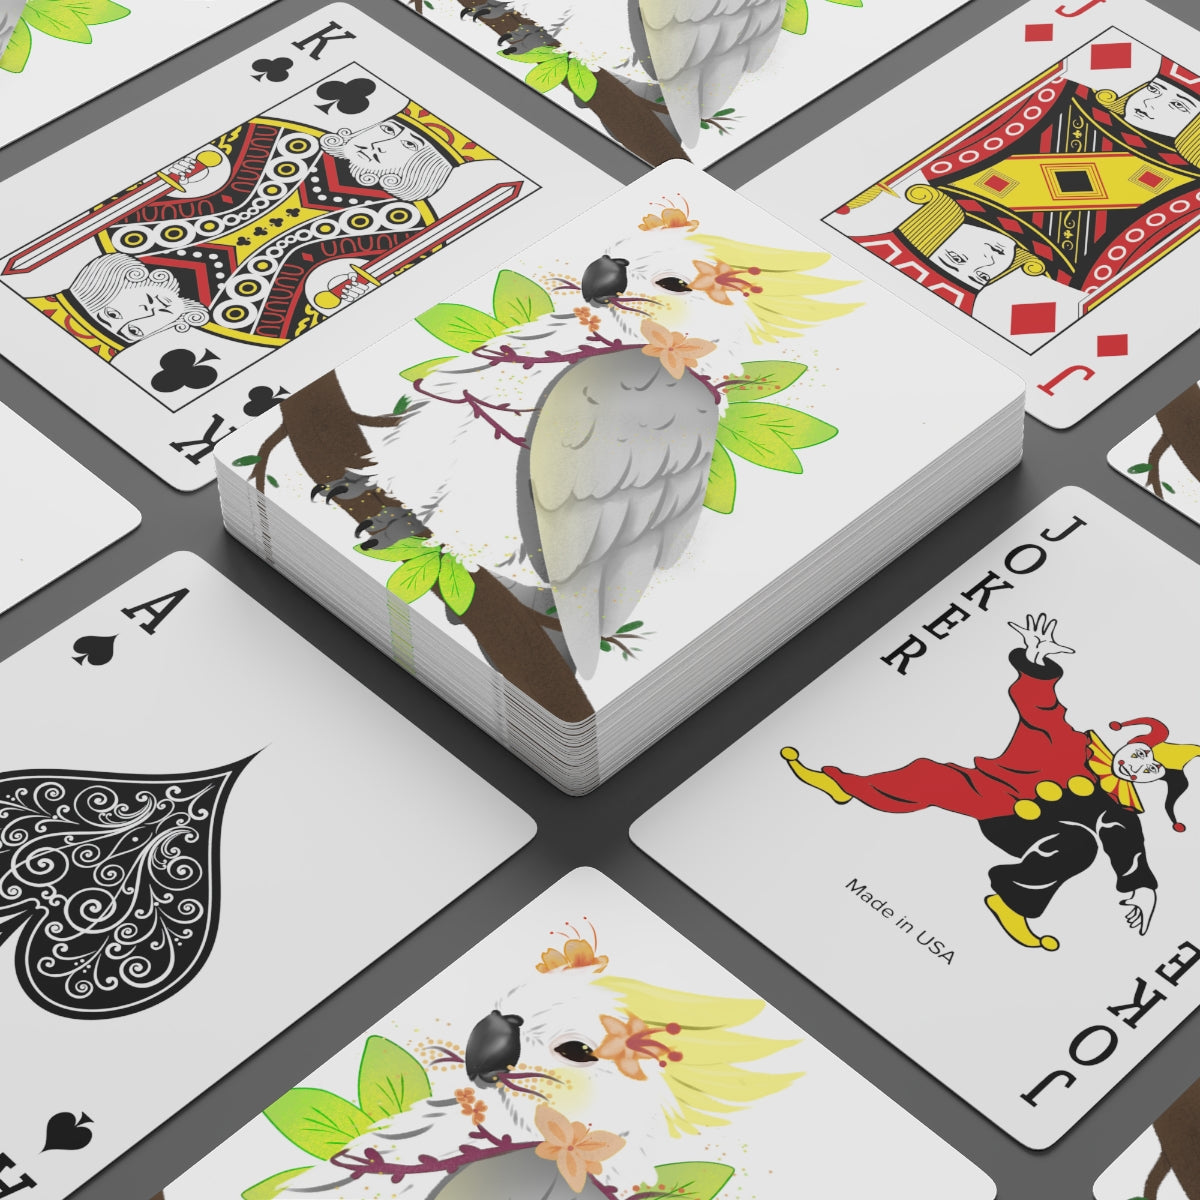 Tropical Cockatoo Poker Cards